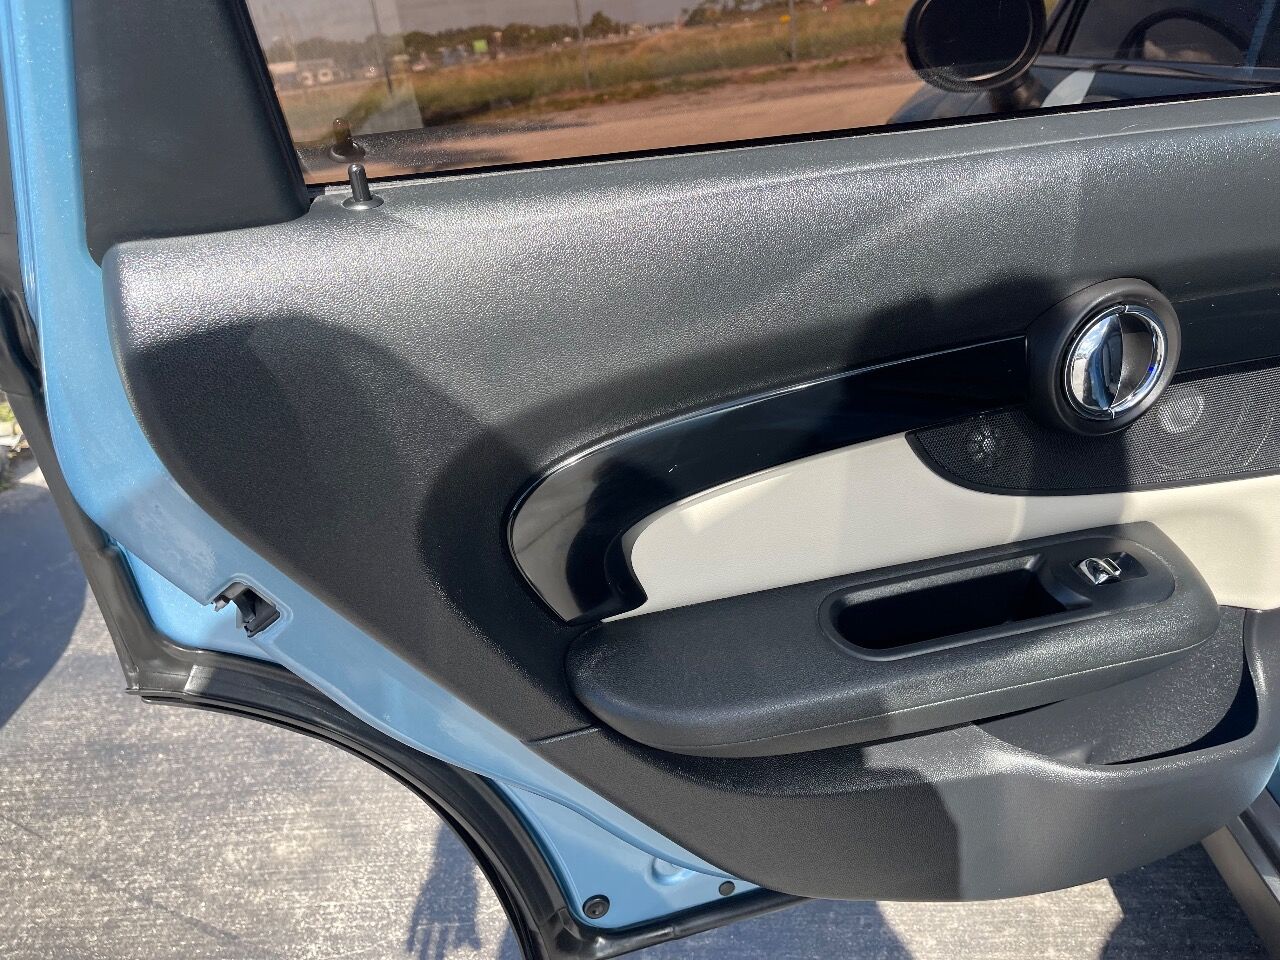 2019 MINI Clubman Hatchback - $19,900